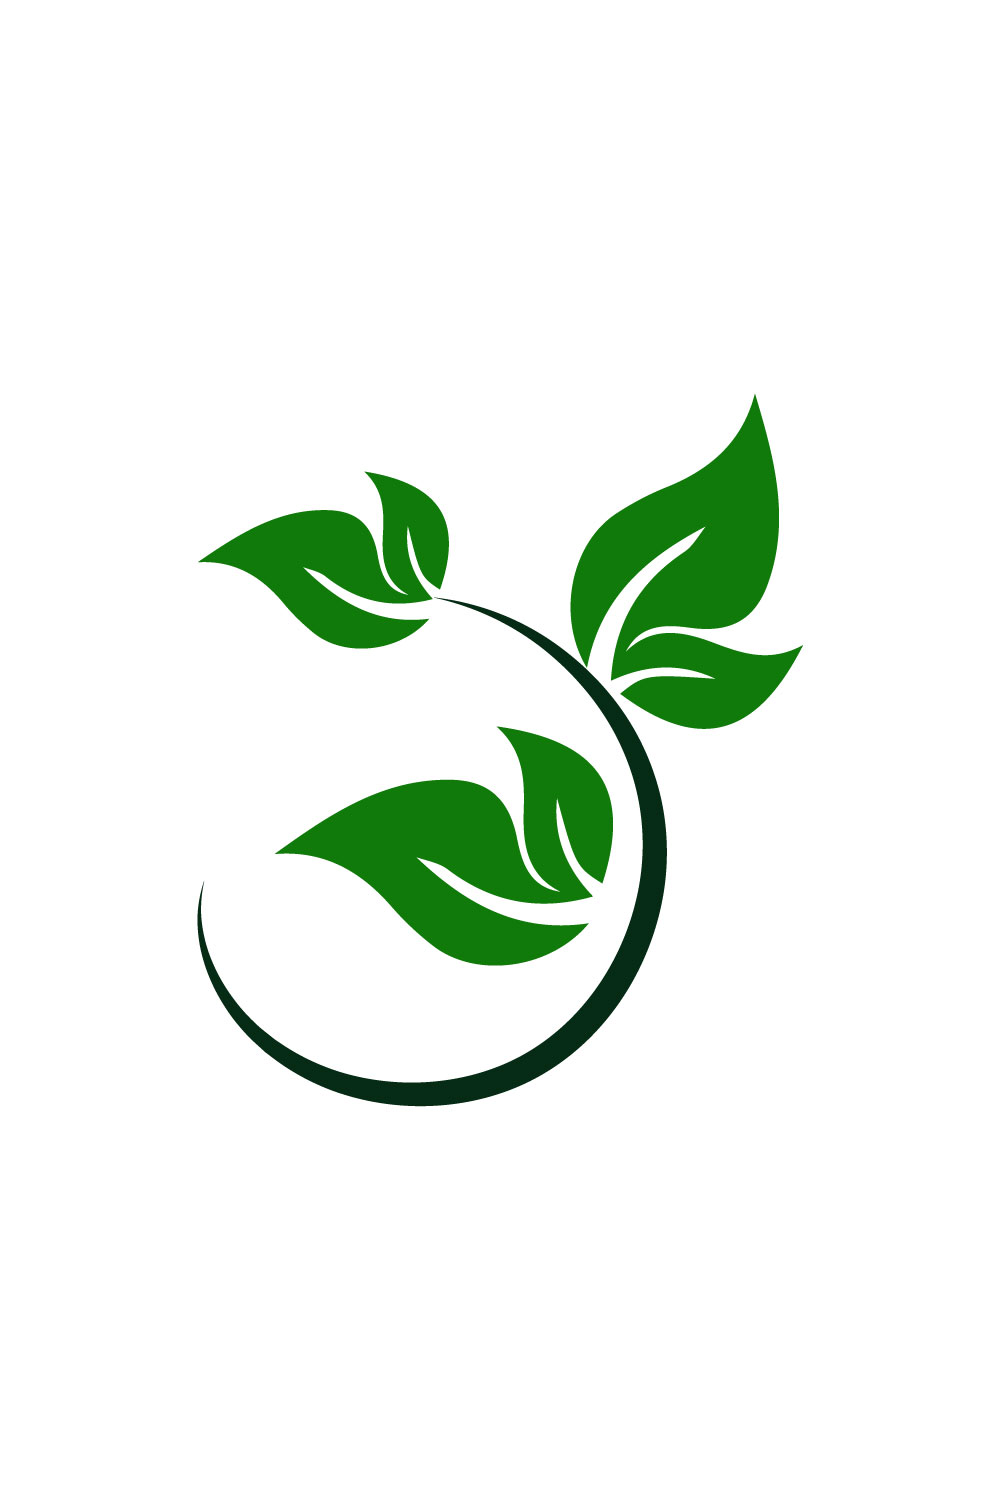 Free organic leaf logo pinterest preview image.